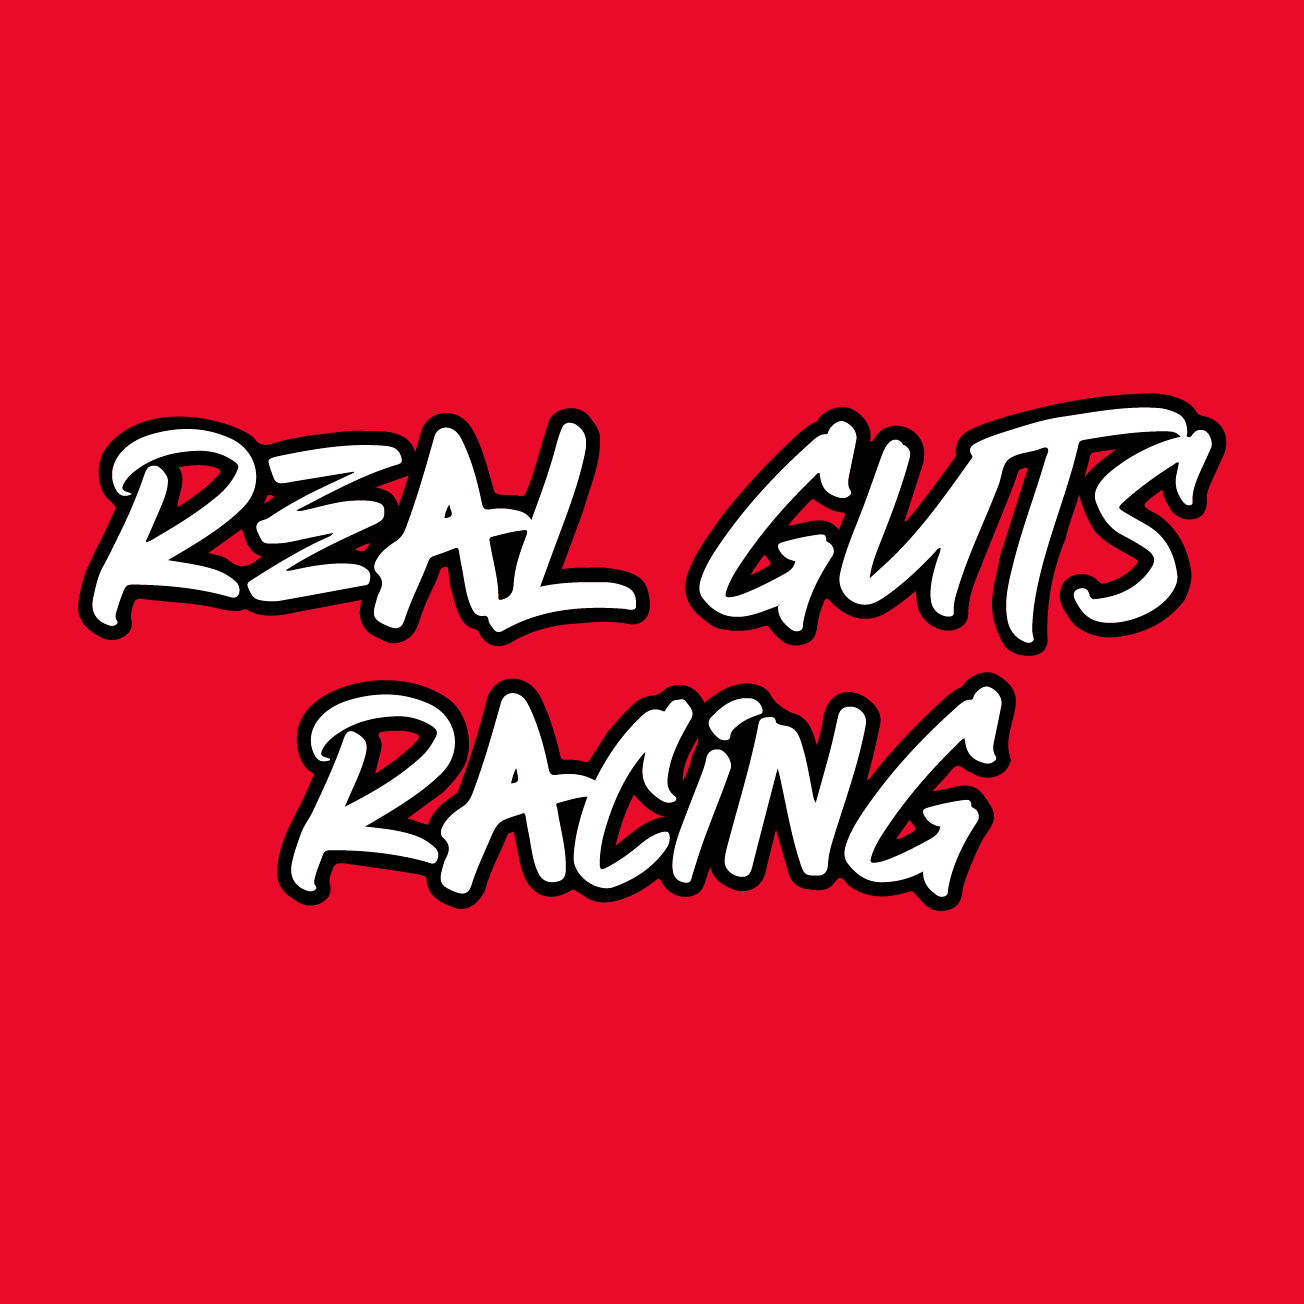 Club Image for REAL GUTS RACING